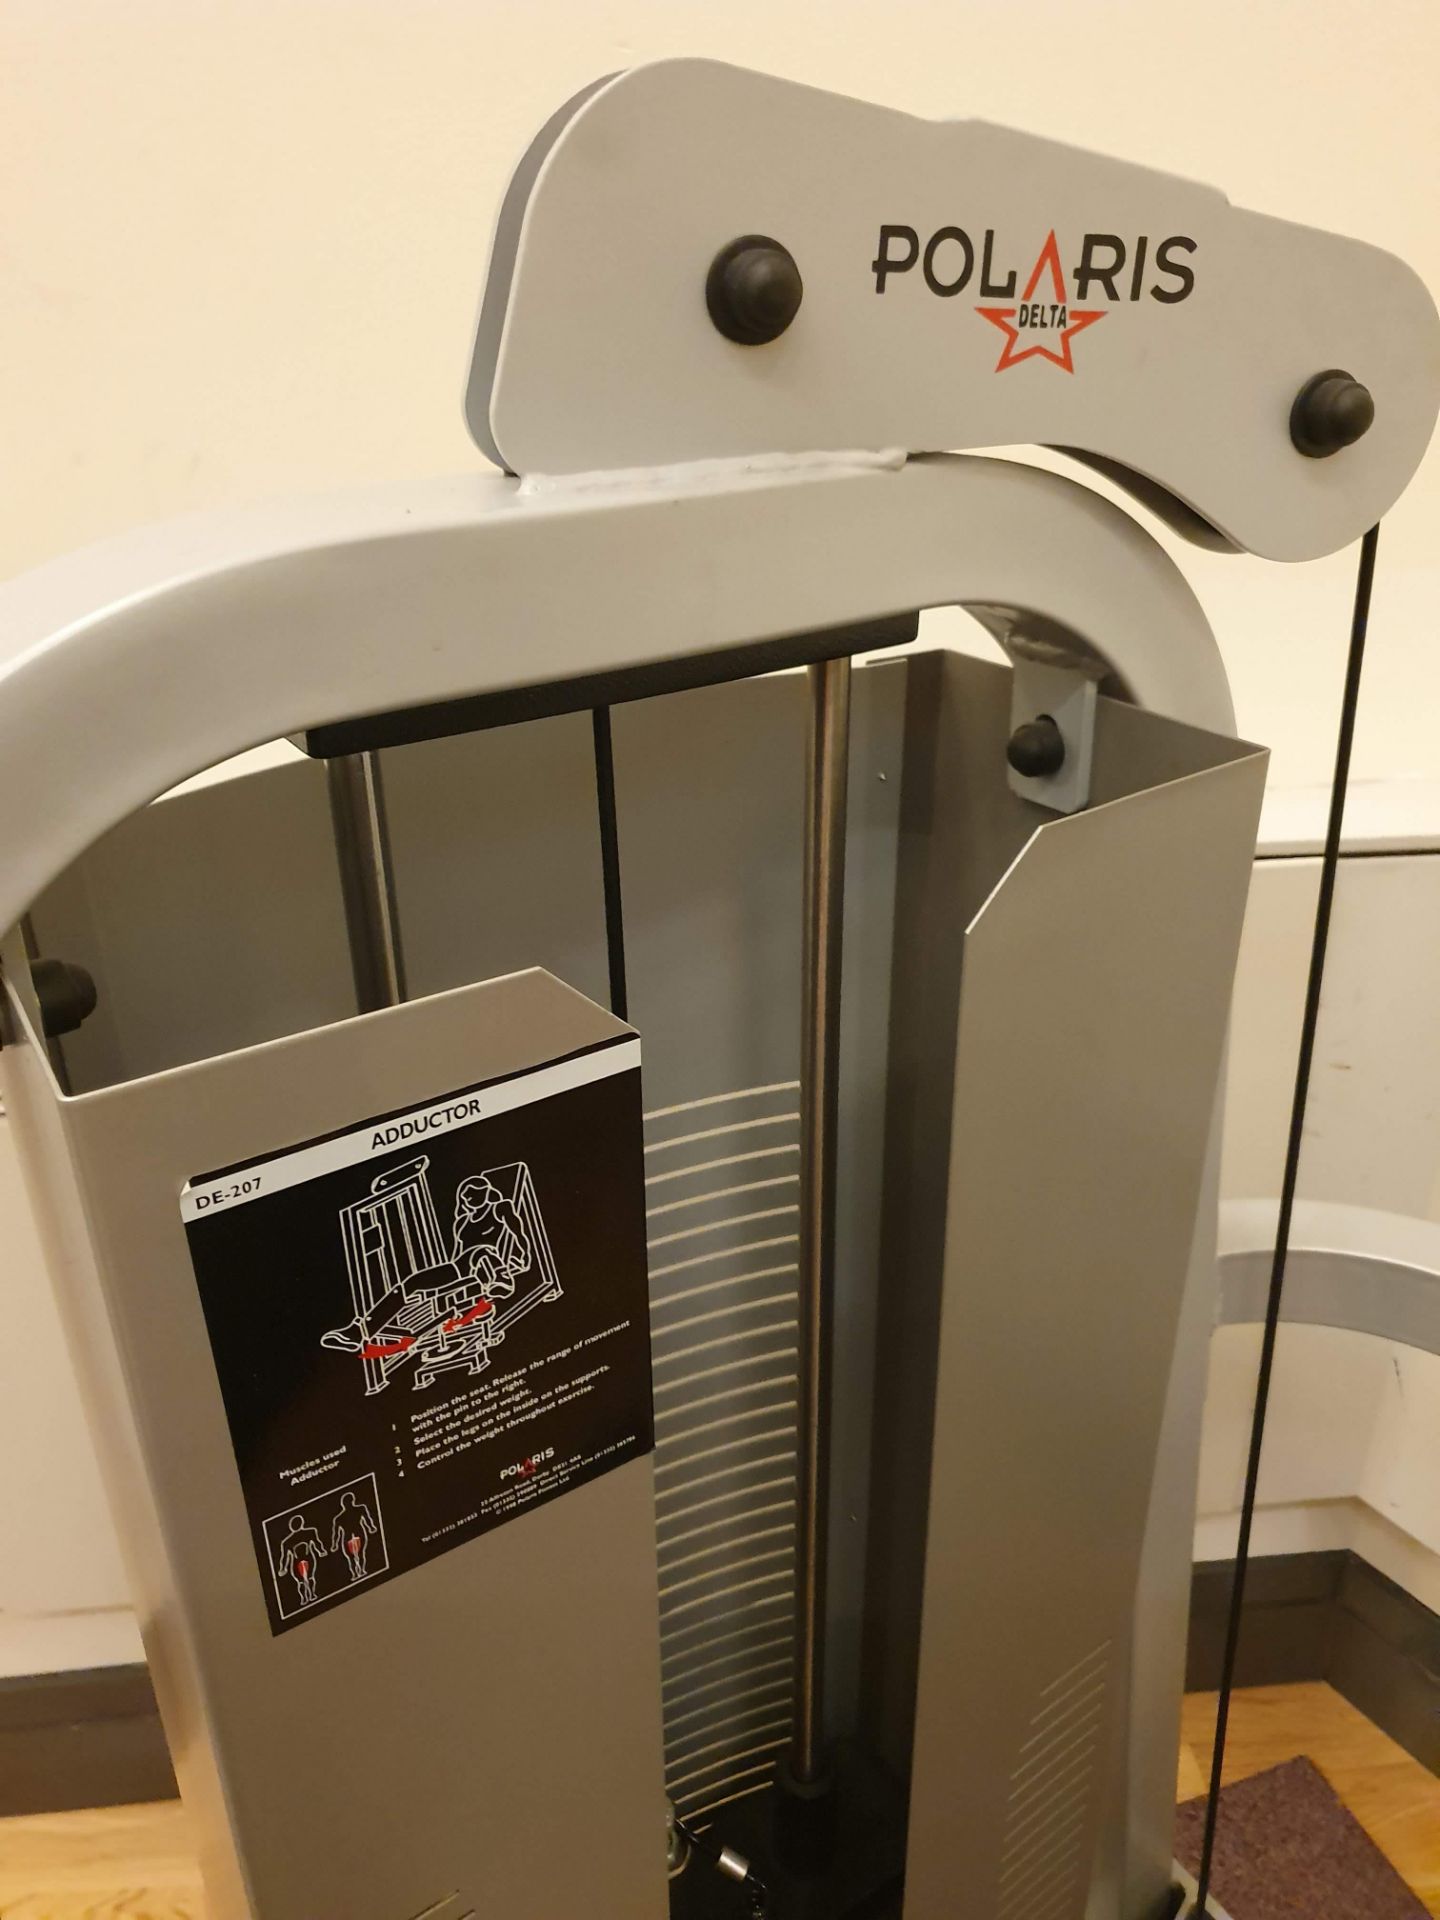 1 x Polaris DE-207 Abductor Gym Machine - CL552 - Location: Altrincham WA14 - Image 3 of 5